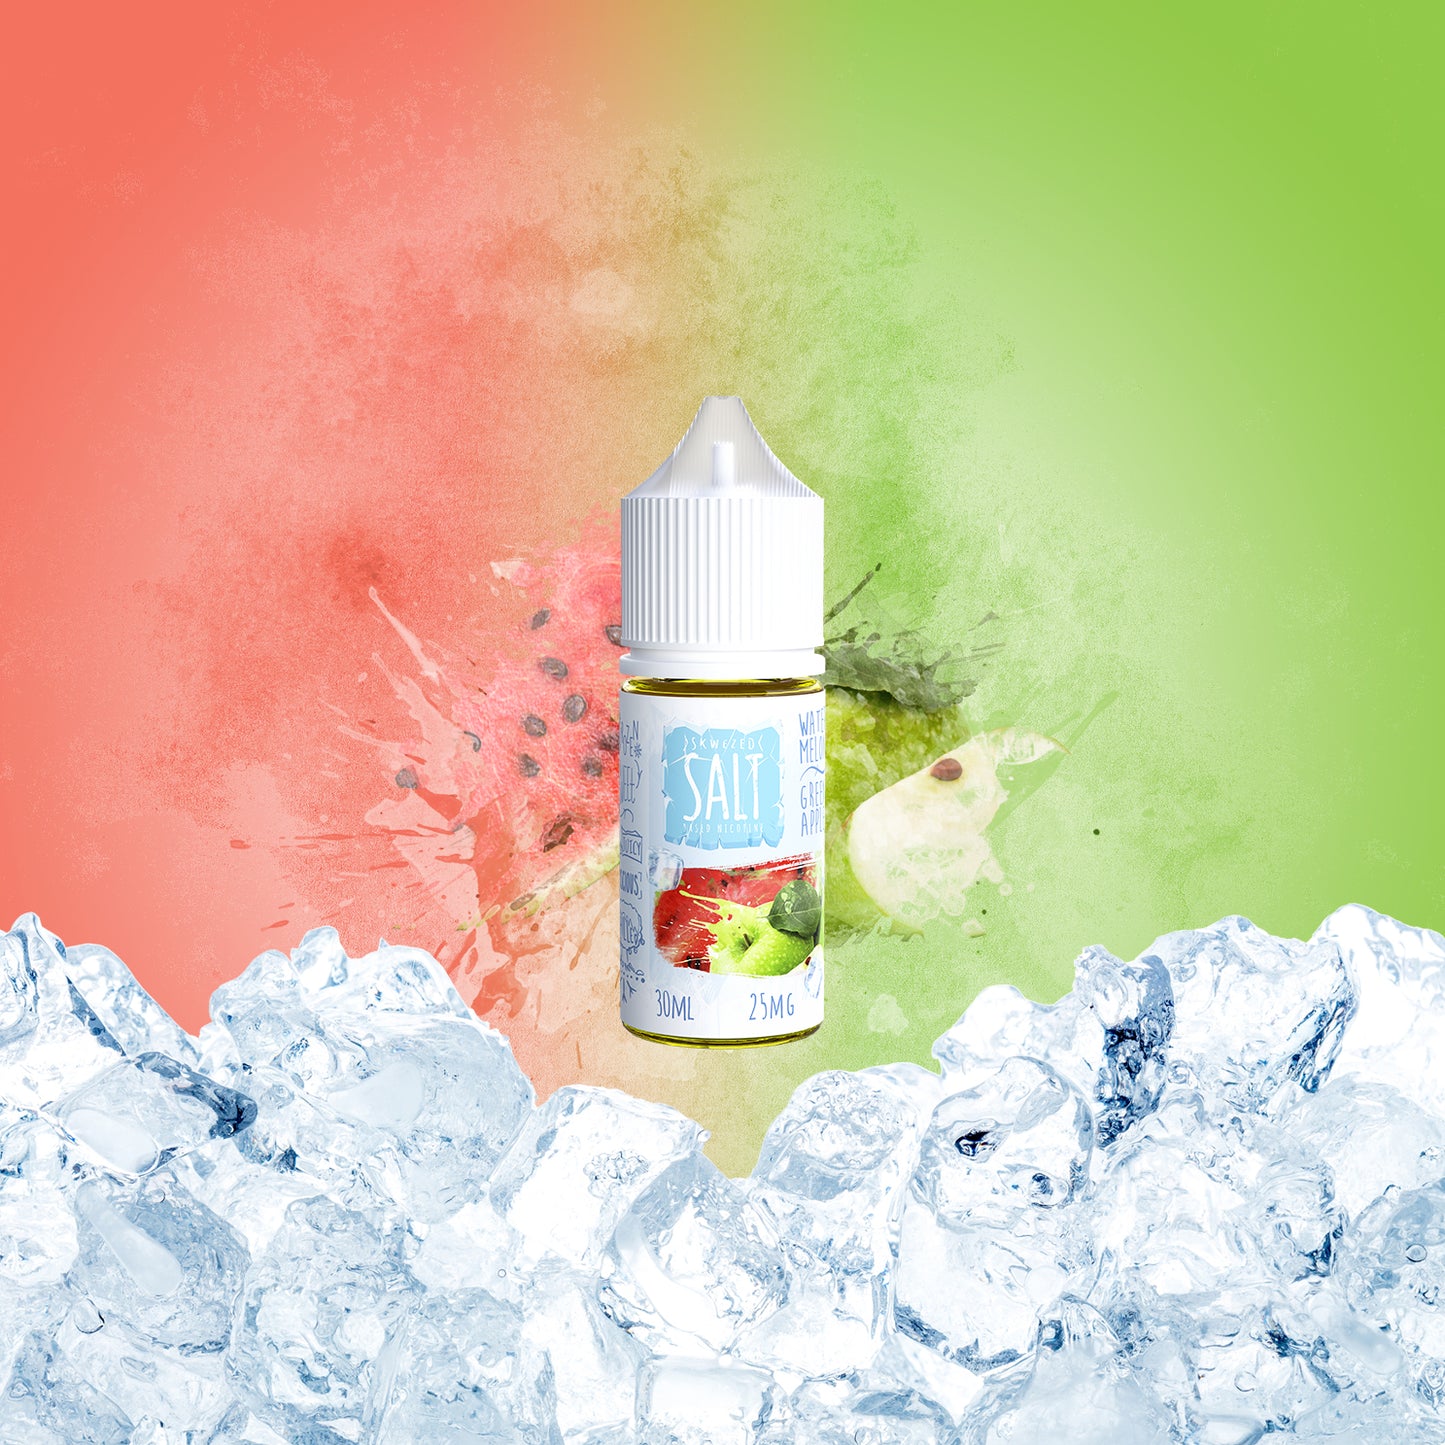 30ml - Skwezed Ice Salt Mix - Watermelon Green Apple ICE